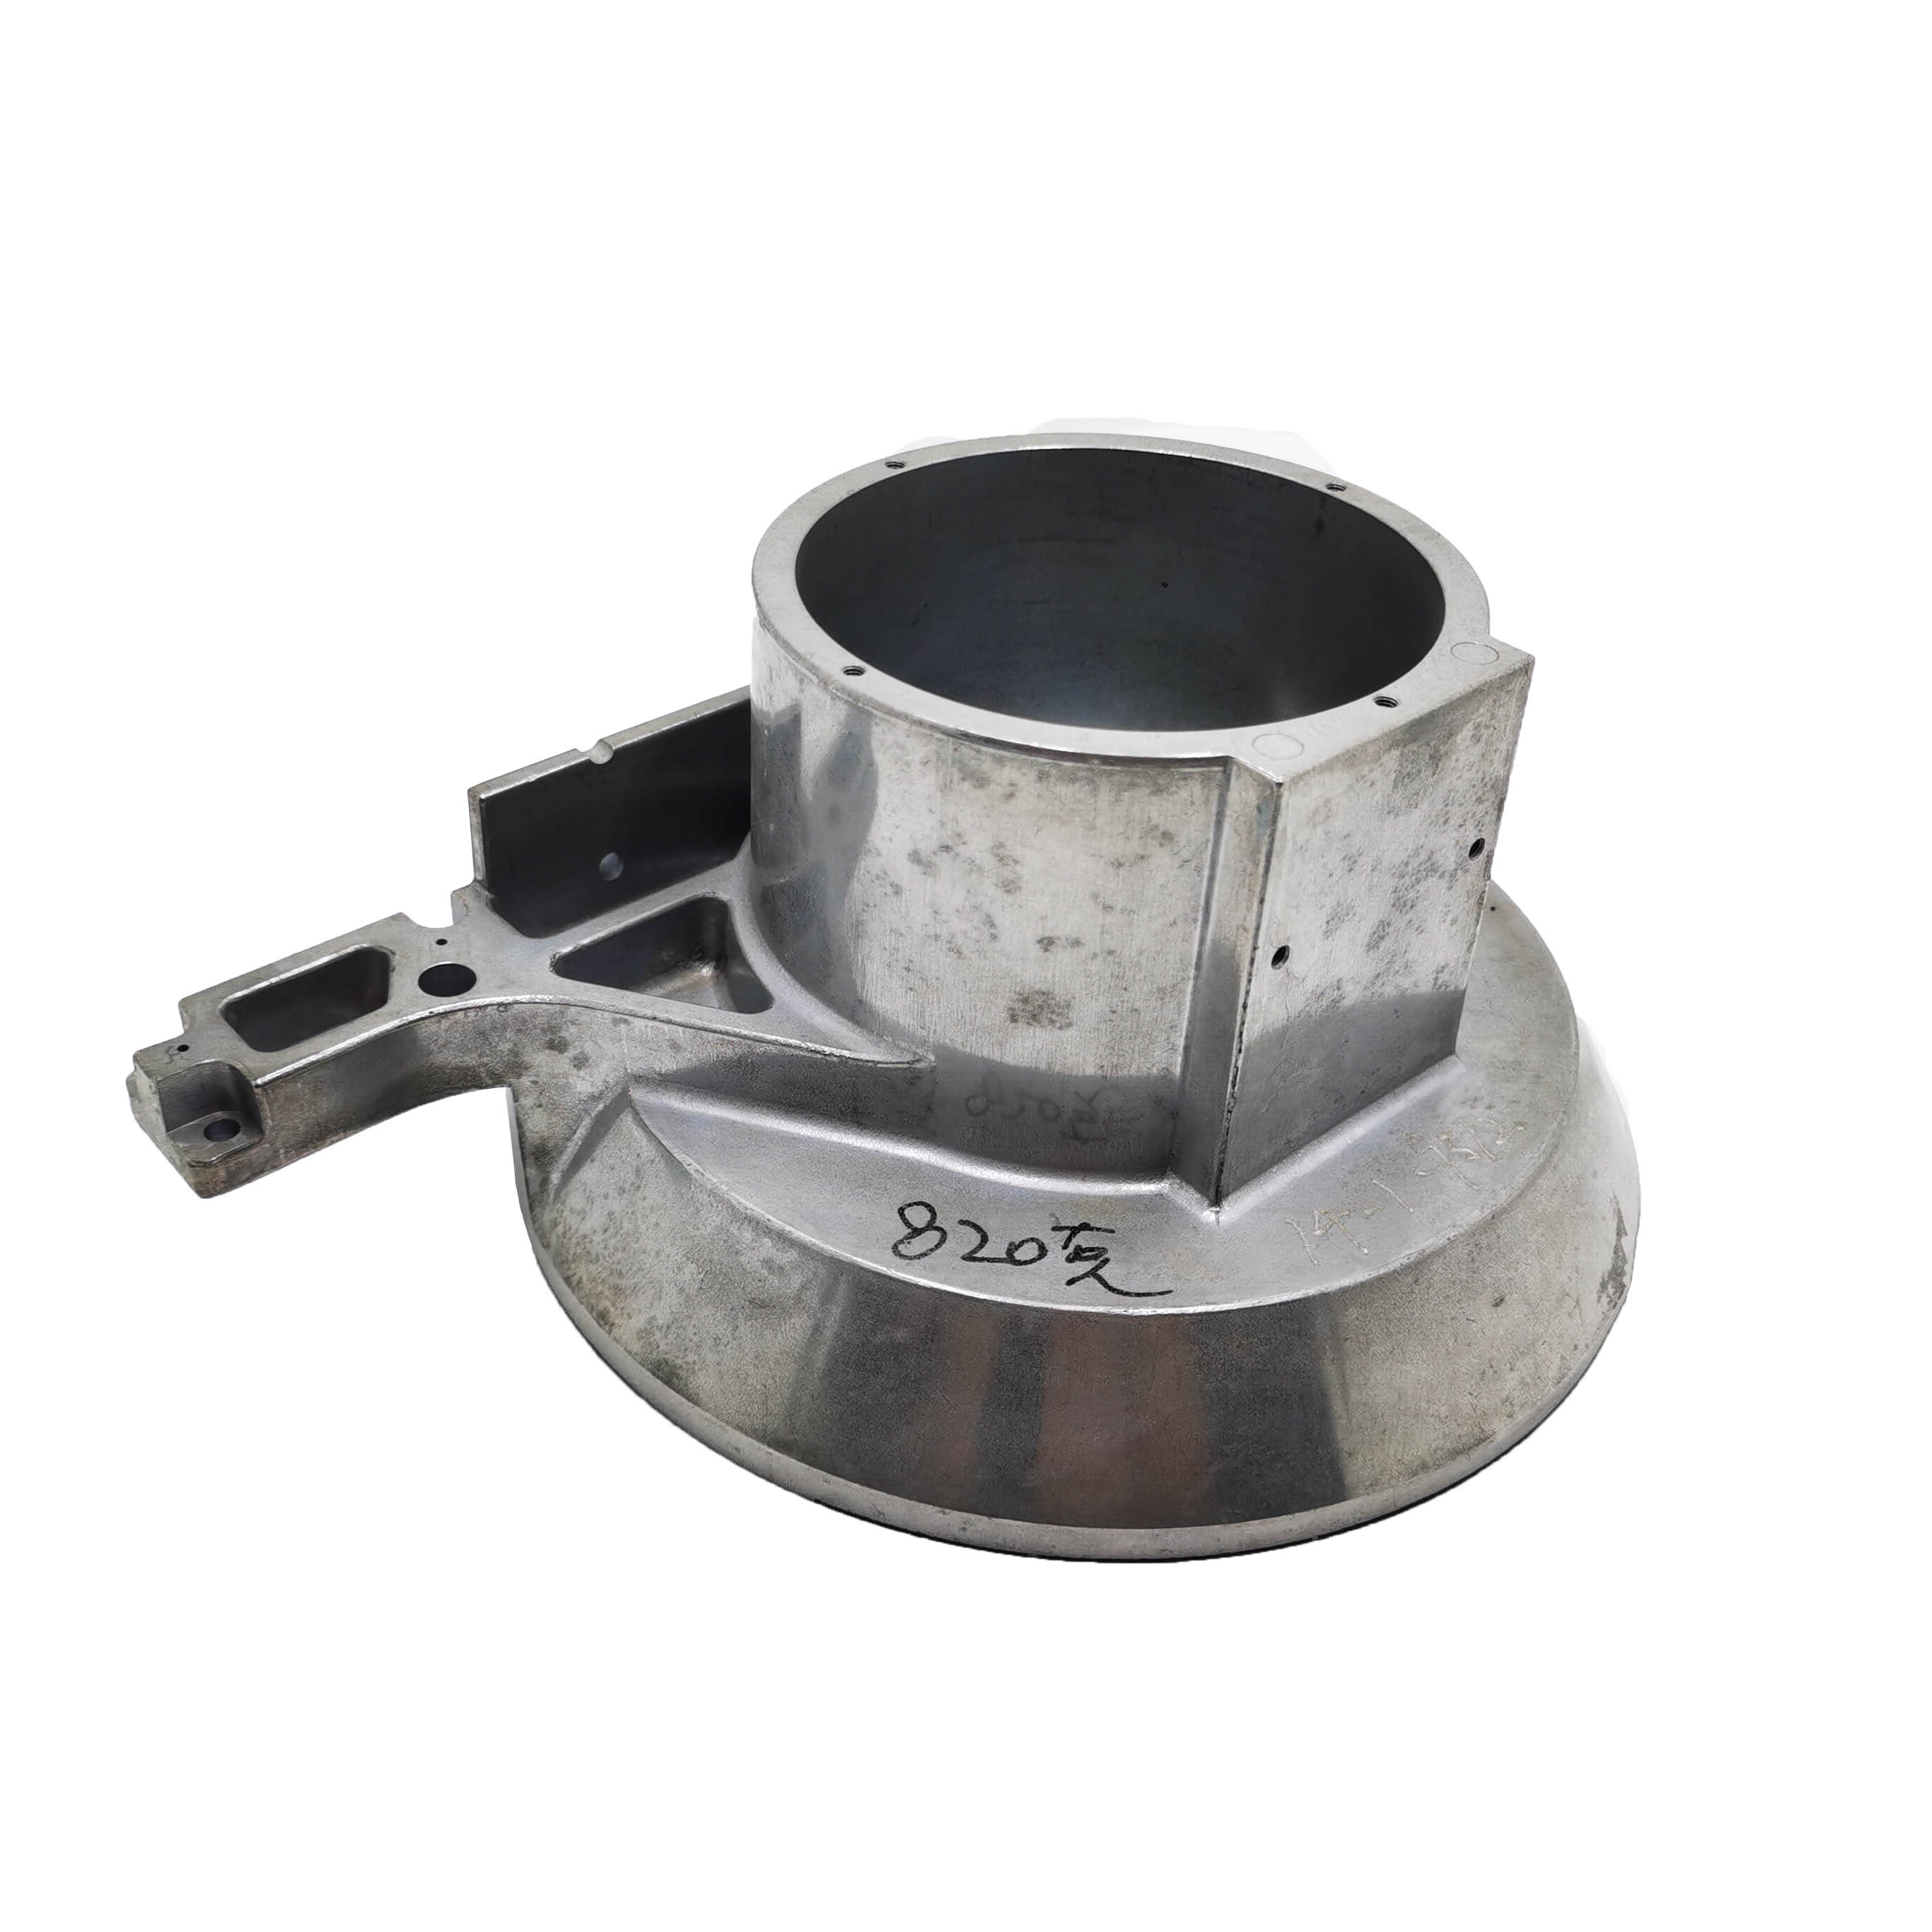 Braket die casting / die cast iron tekanan aluminium yang disesuaikan dengan presisi tinggi